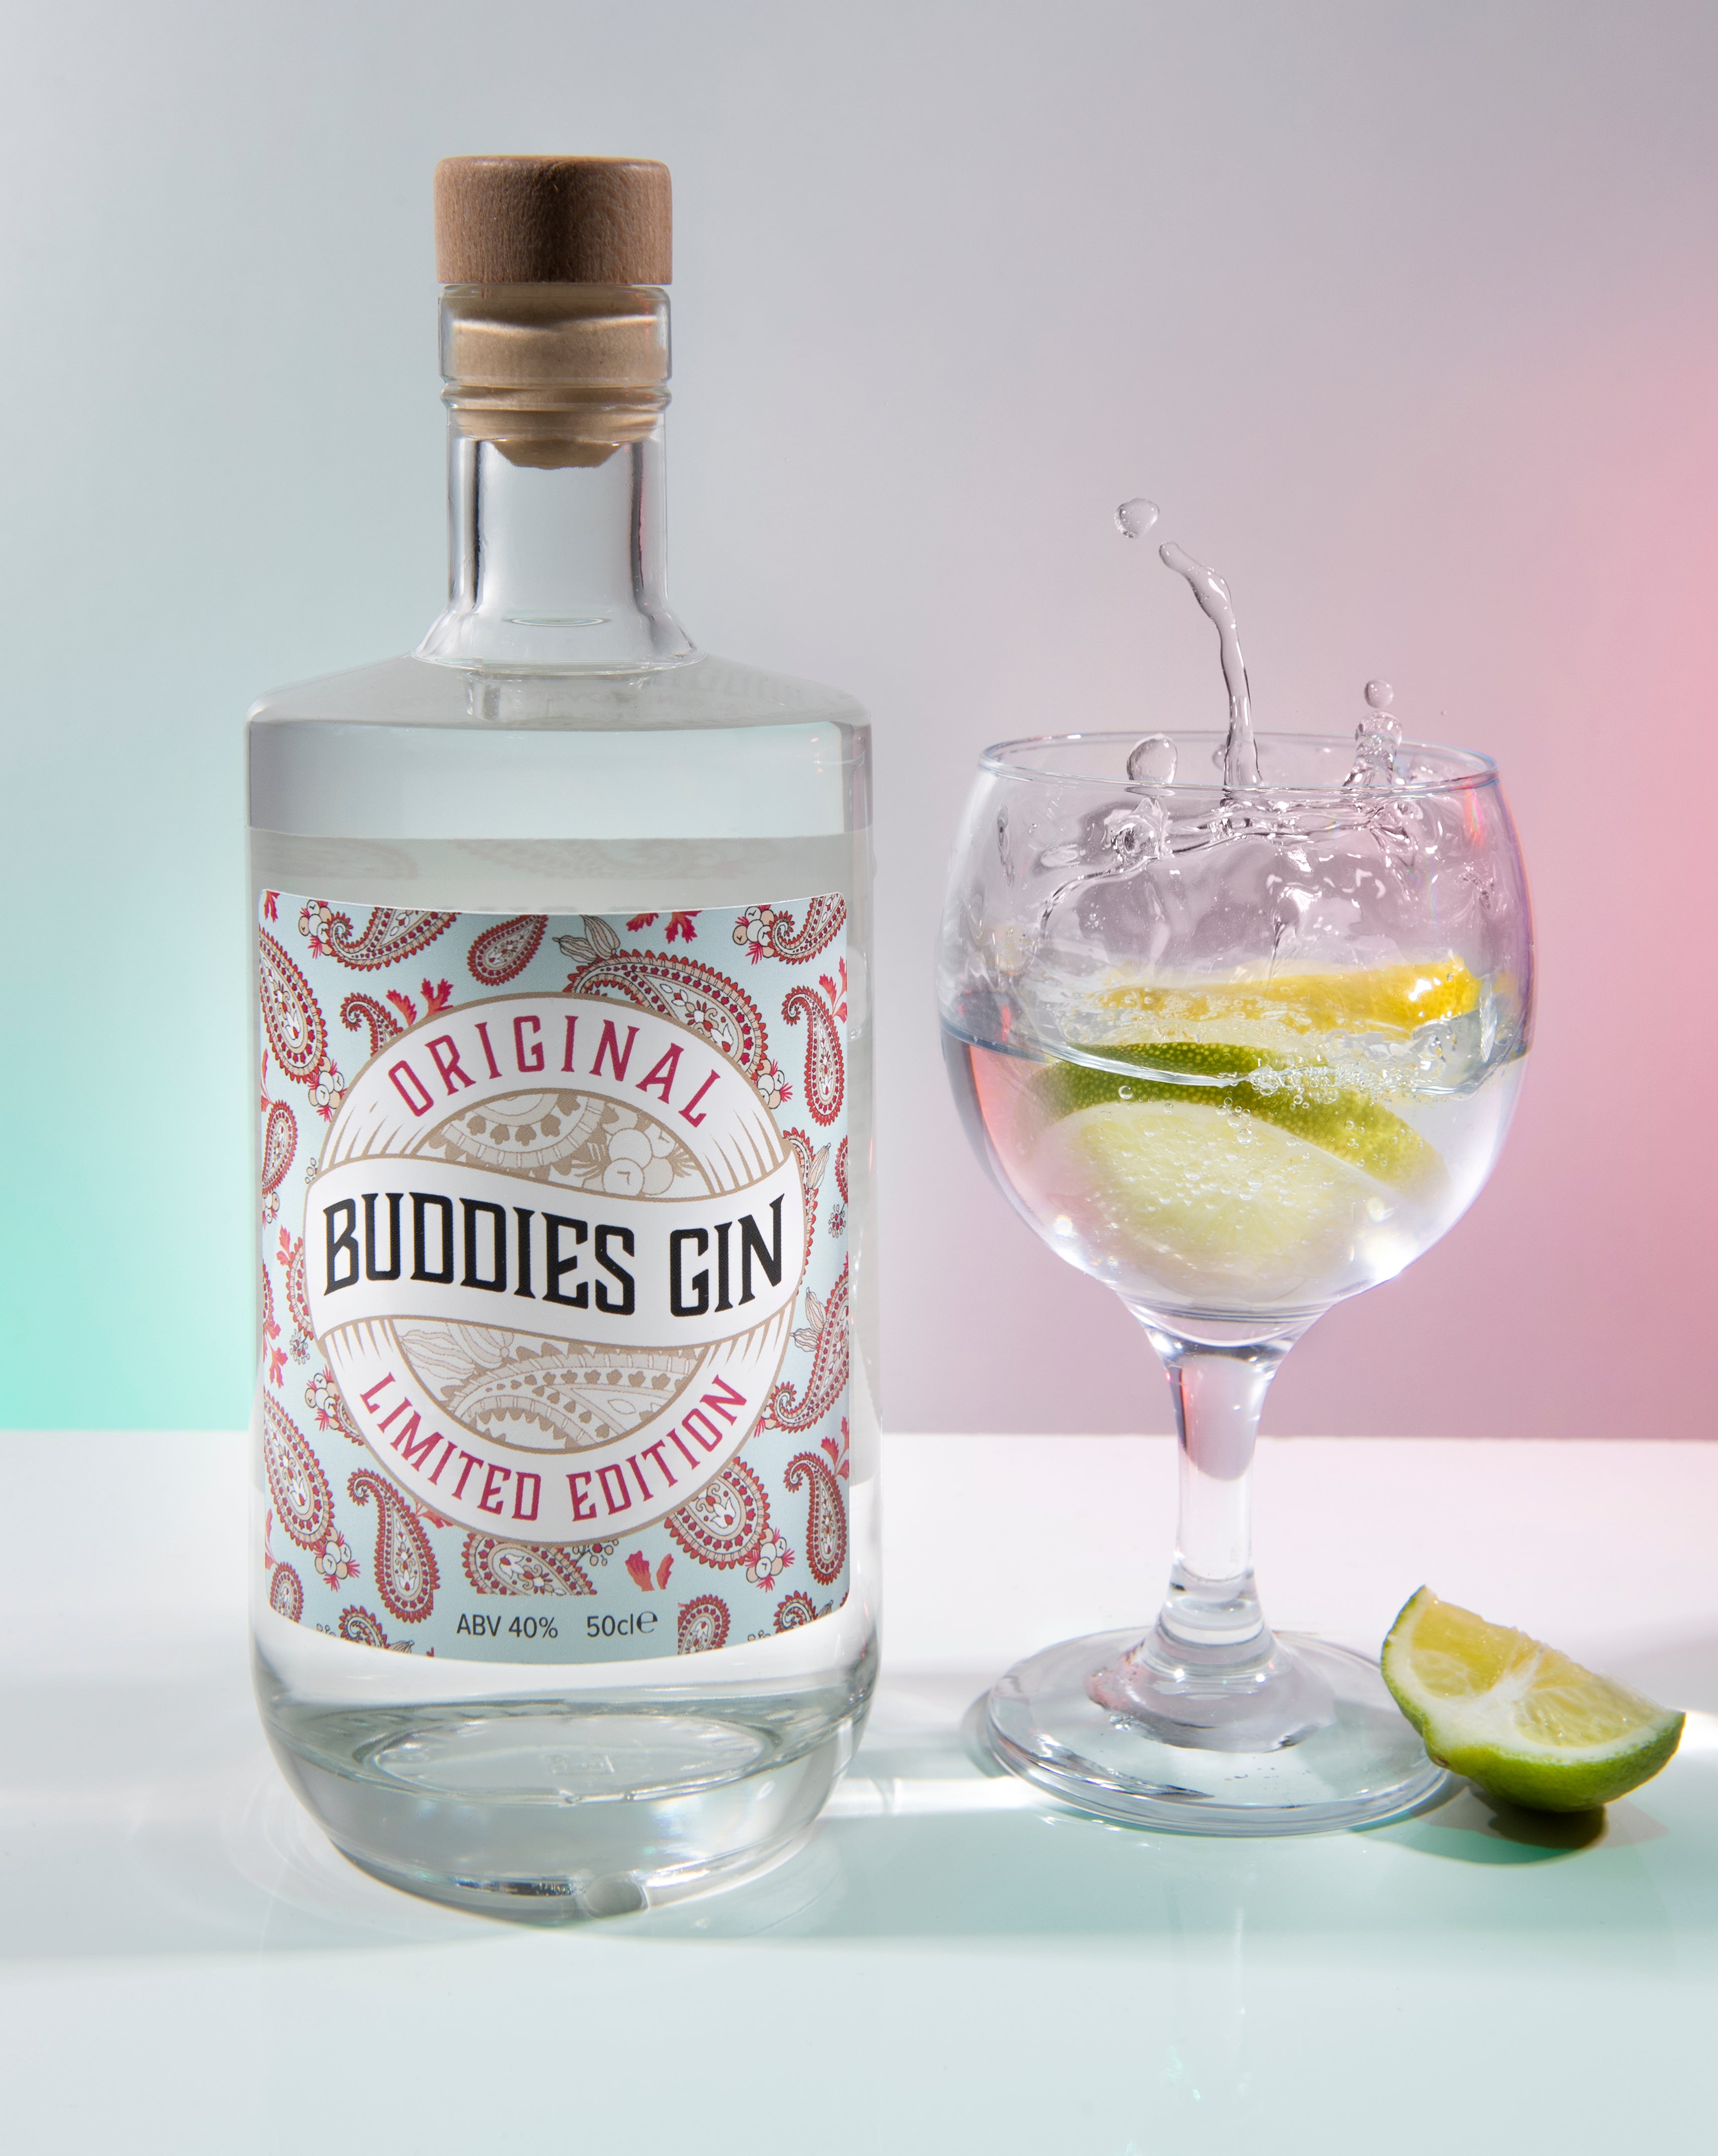 Limited Edition 50cl Original Buddies Gin